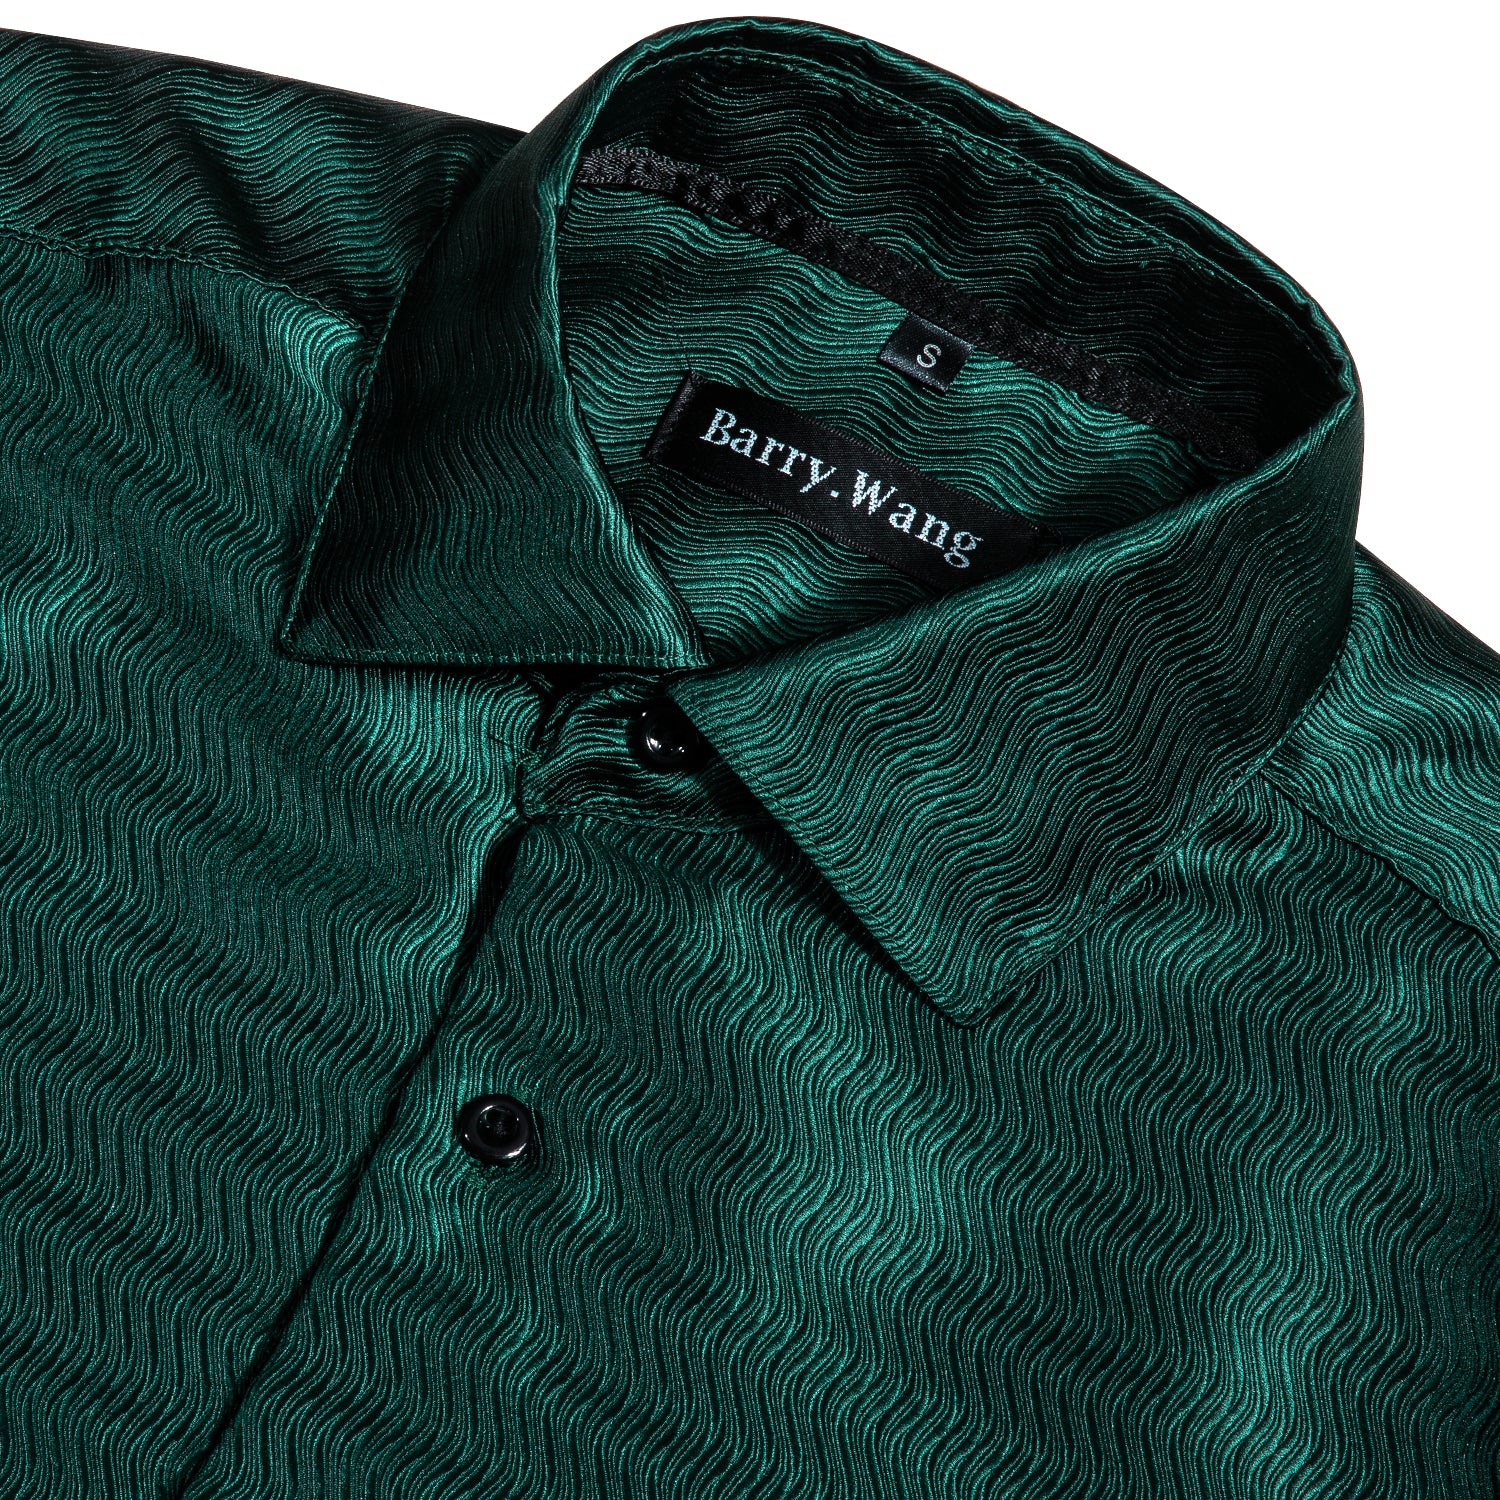 Barry.wang Button Down Shirt Green Solid Silk Shirt for Men Classic Hot